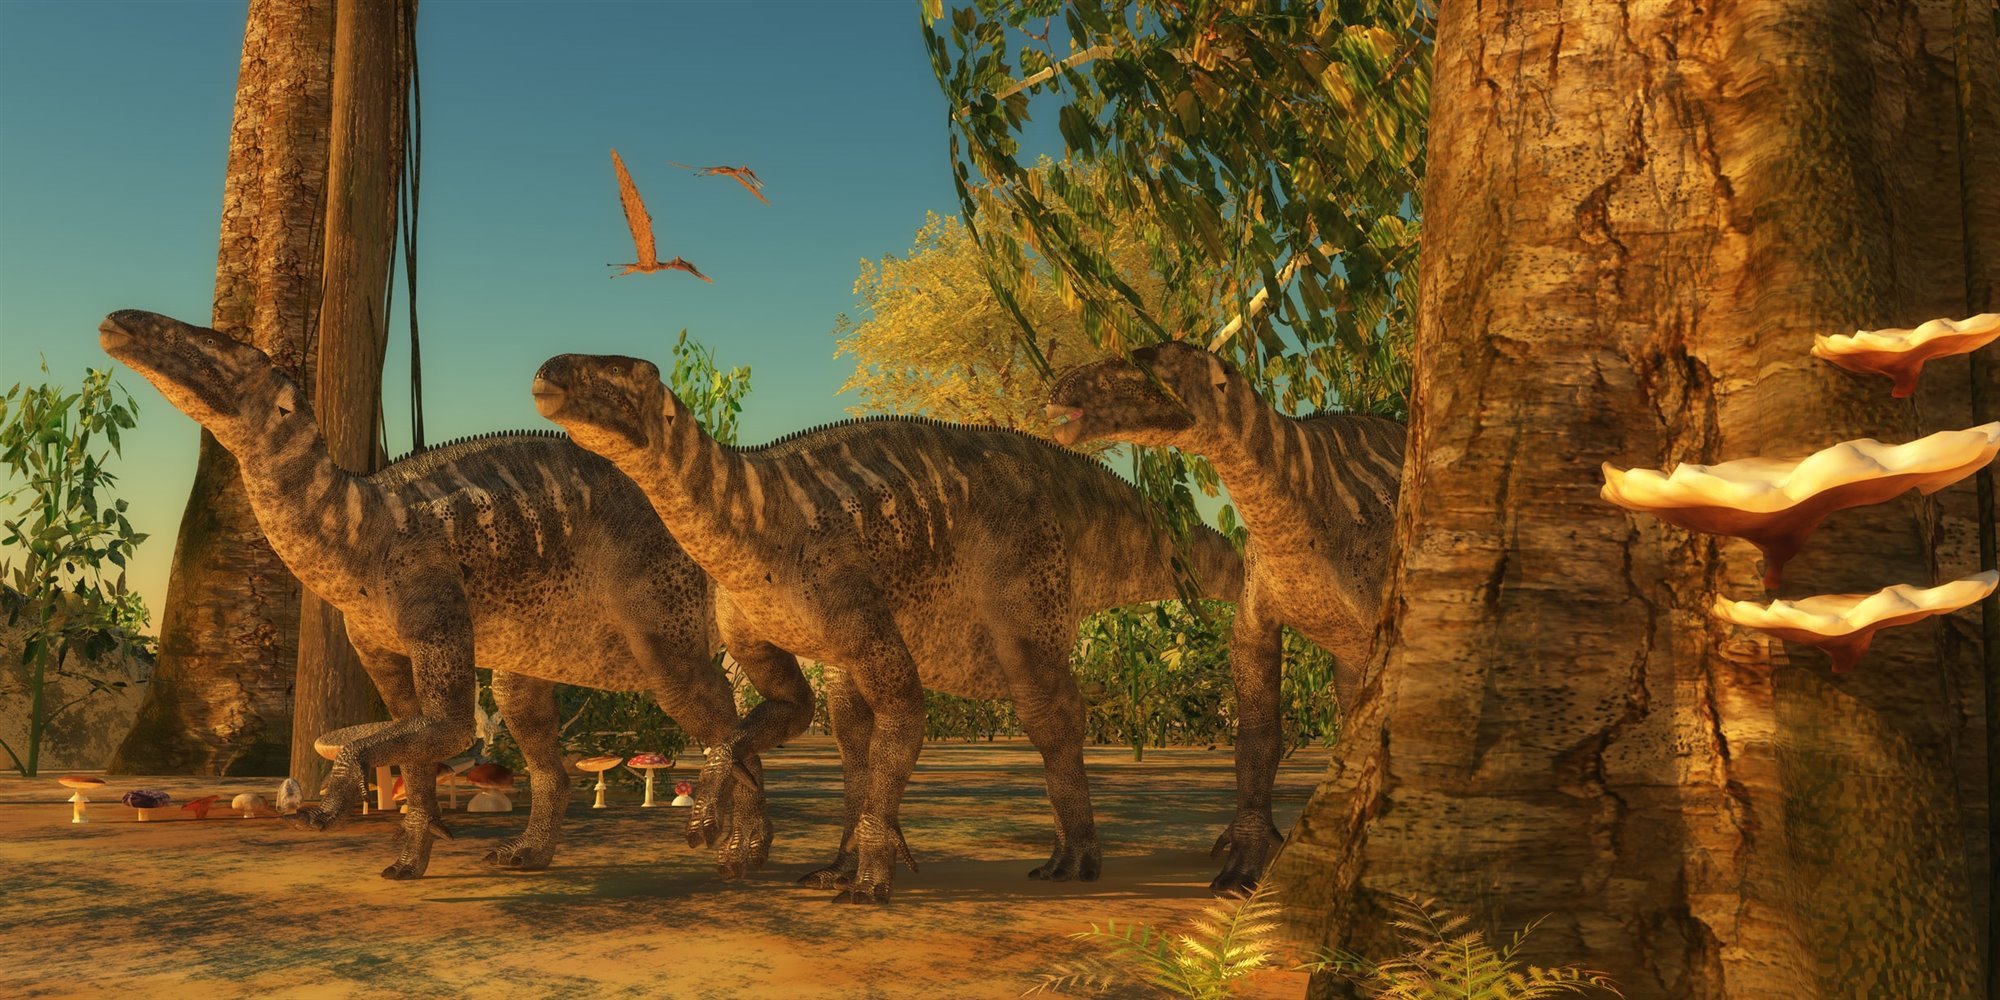 Iguanodon galvensis. Iguanodones